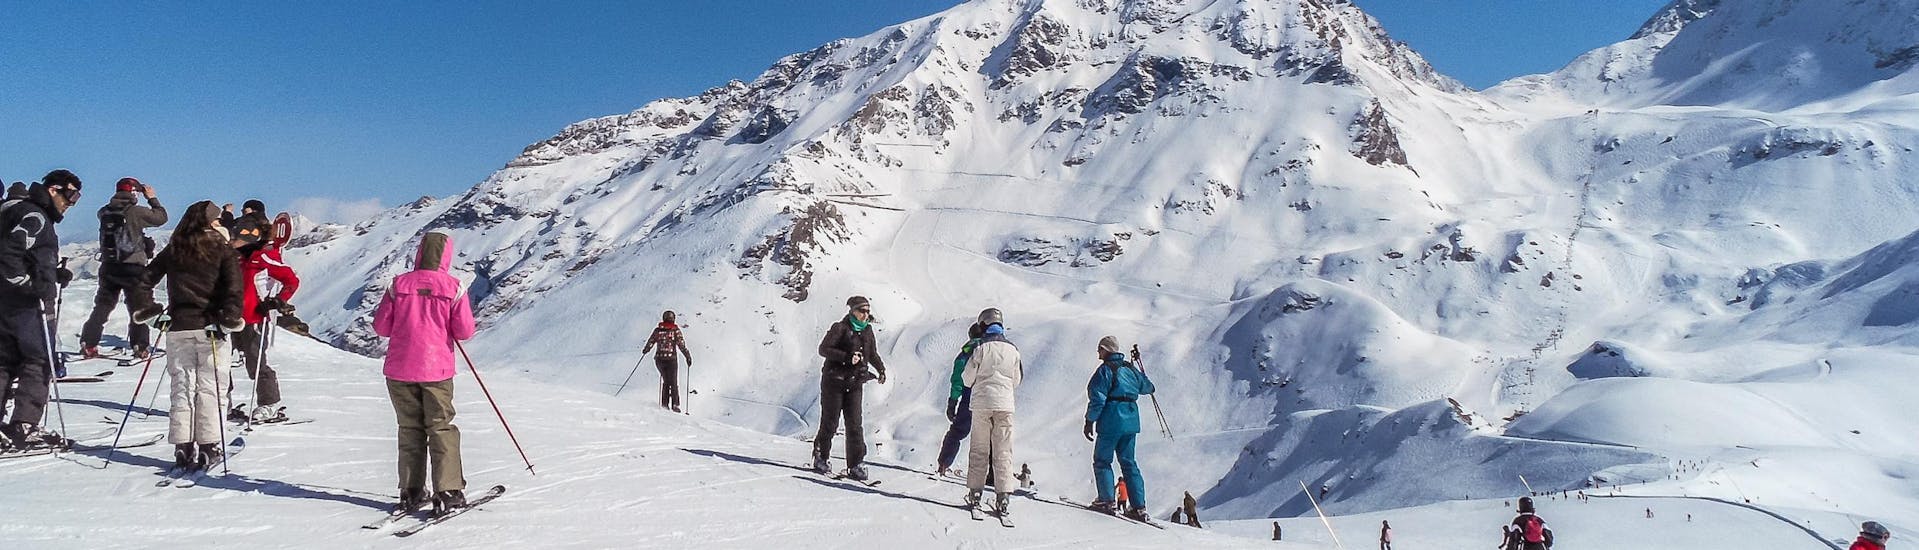 Adults and kids skiing in Les Arcs ski resort.